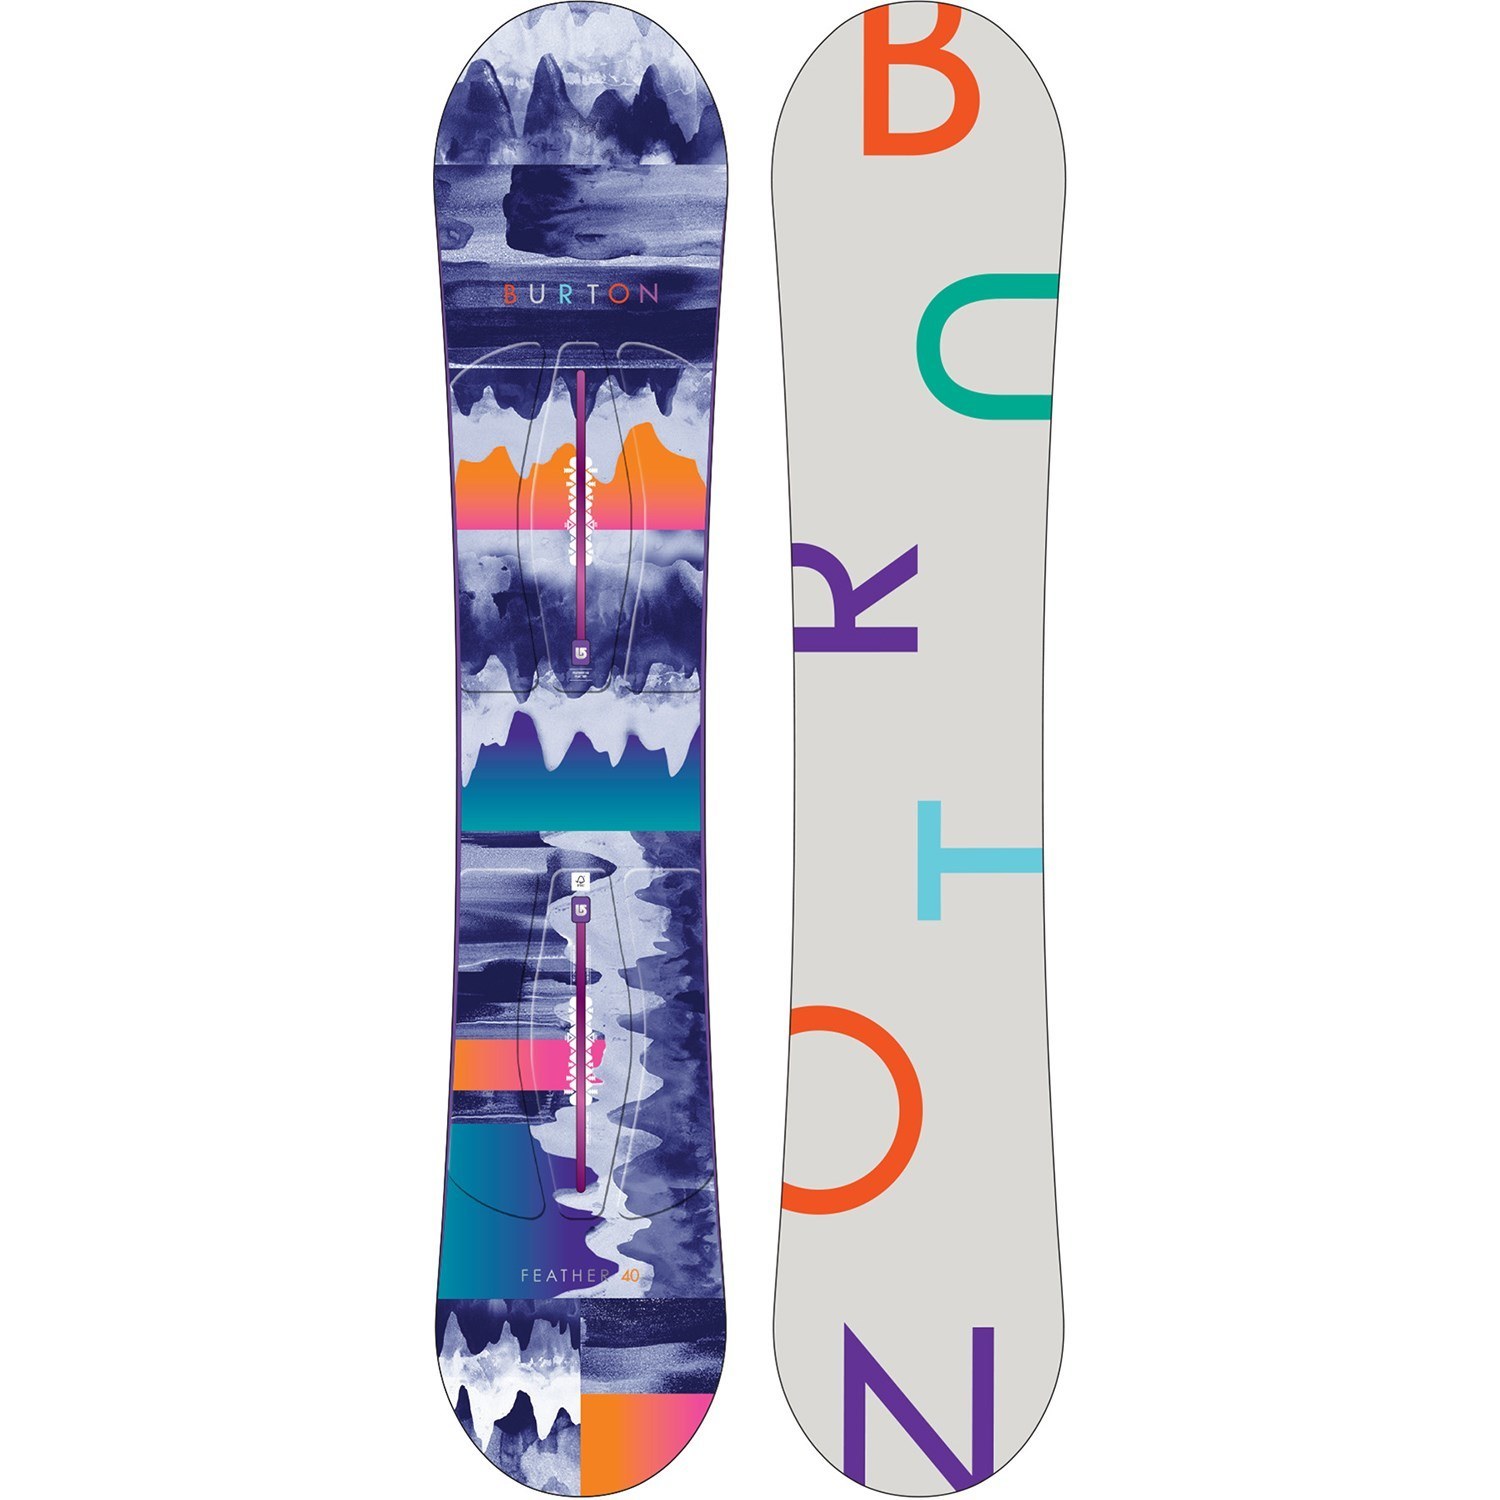 25 Lovely Best Burton Snowboard - Lates Trends